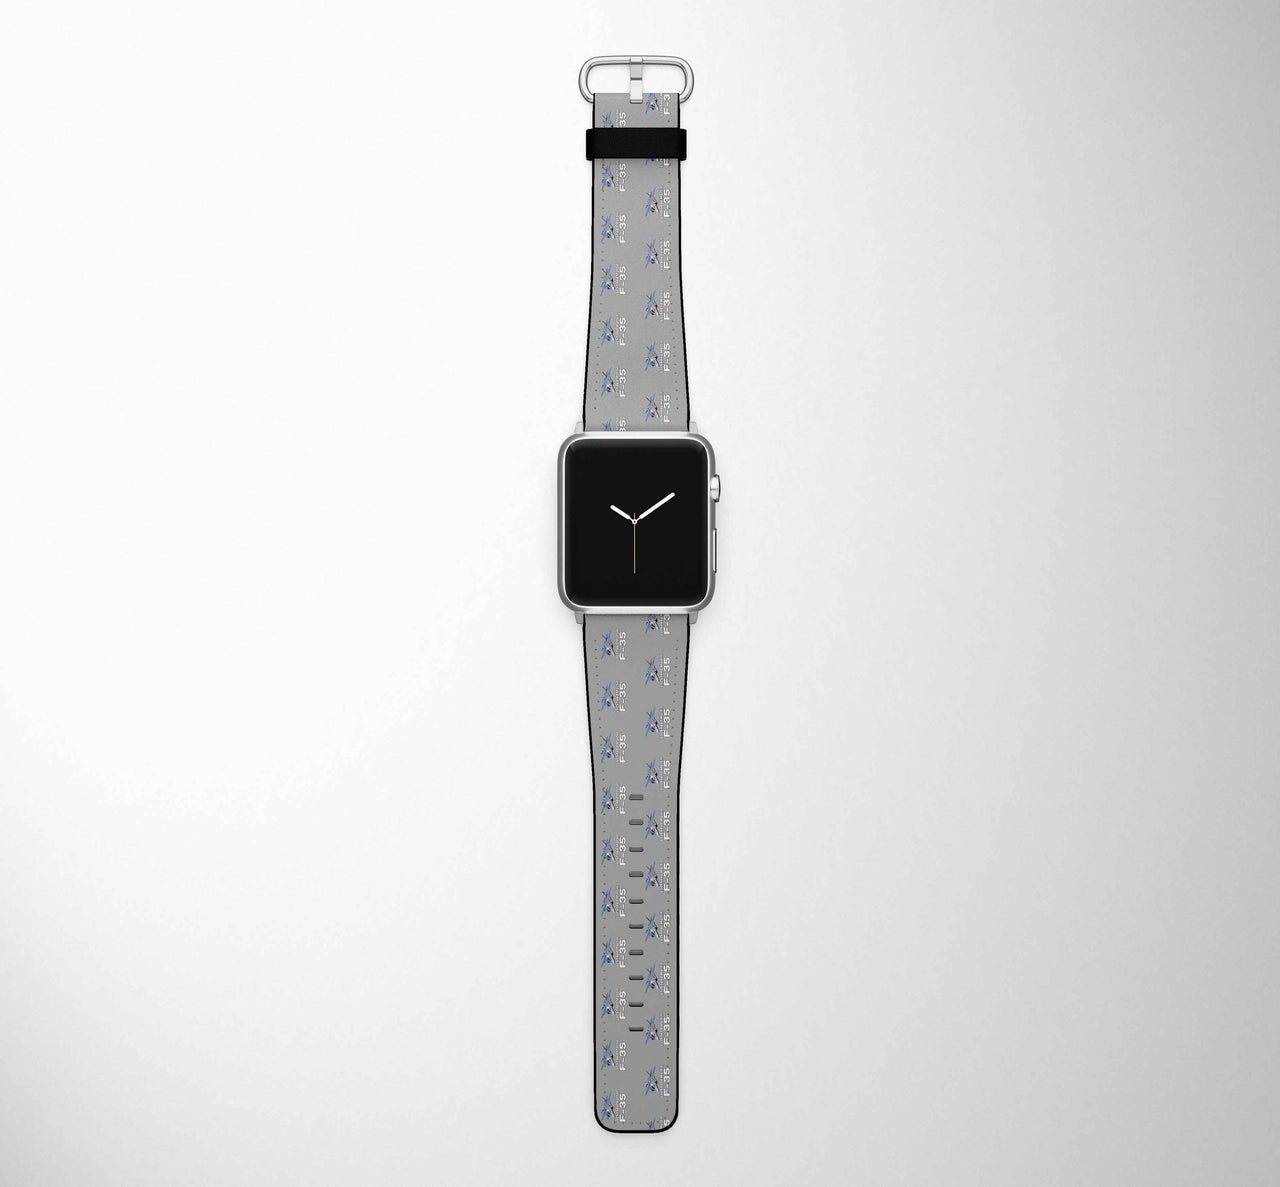 The Lockheed Martin F35 Designed Leather Apple Watch Straps